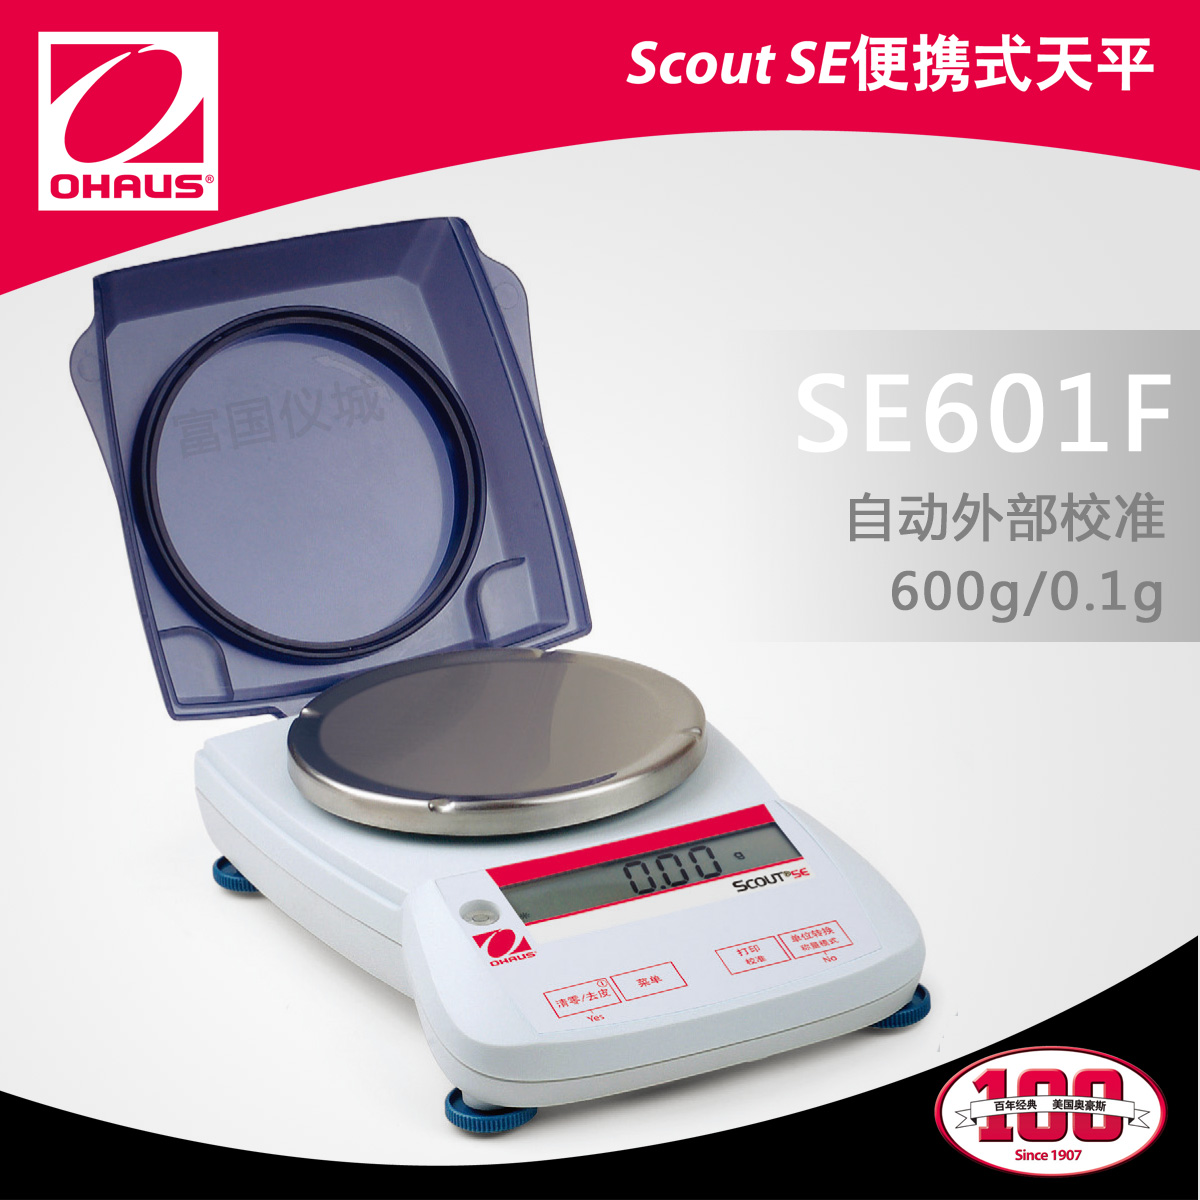 SE601F便携式电子天平/电子秤(停产)